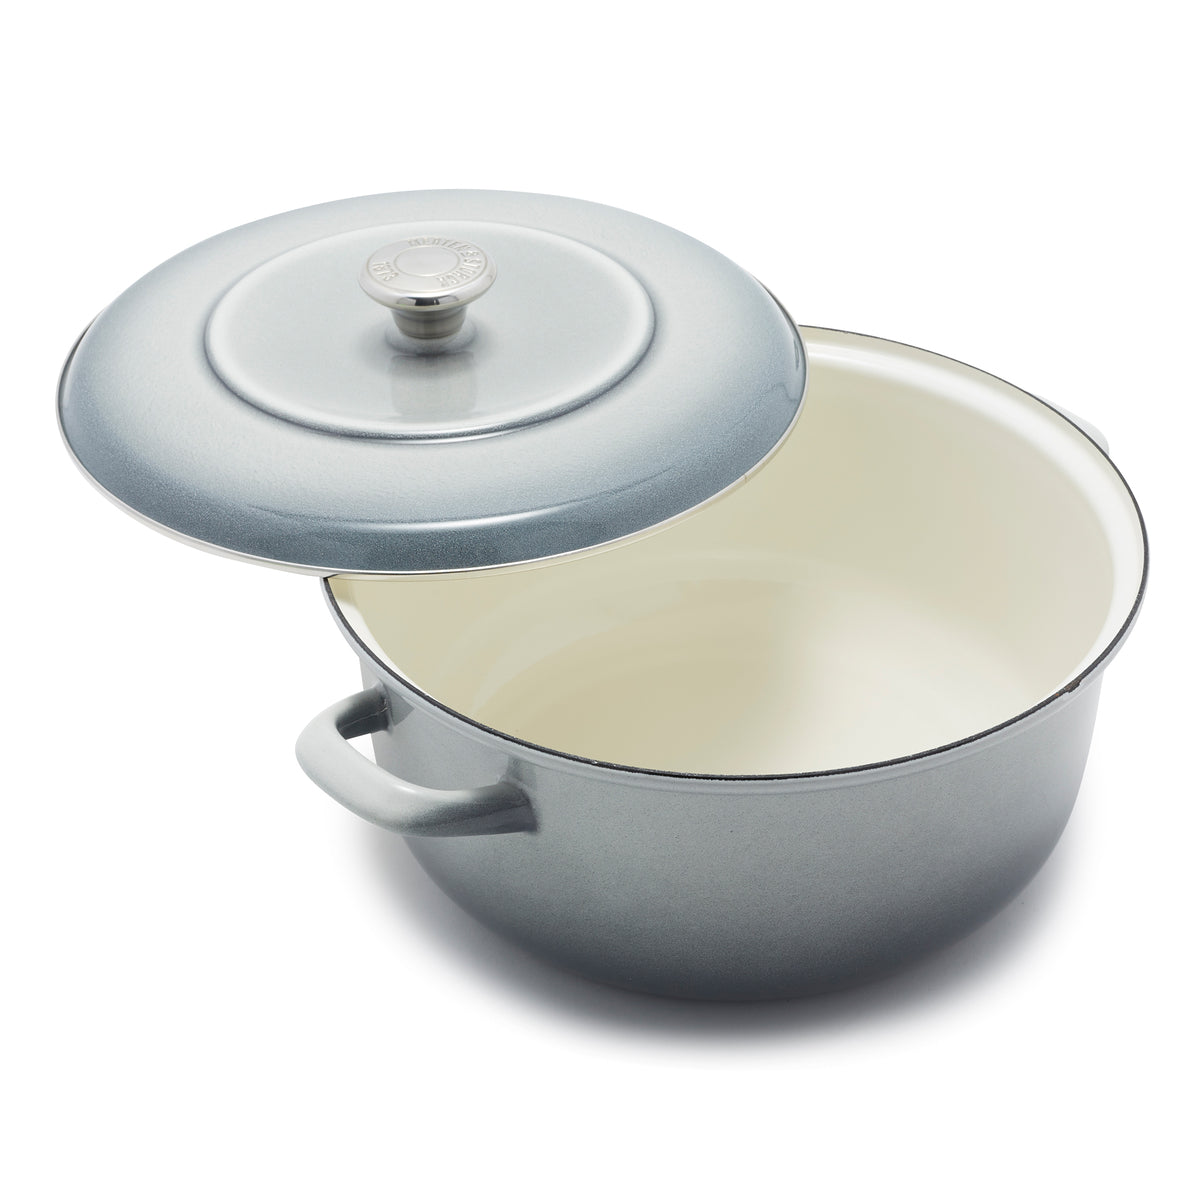 Crock Pot Artisan 7-Quart Round Dutch Oven - Gray